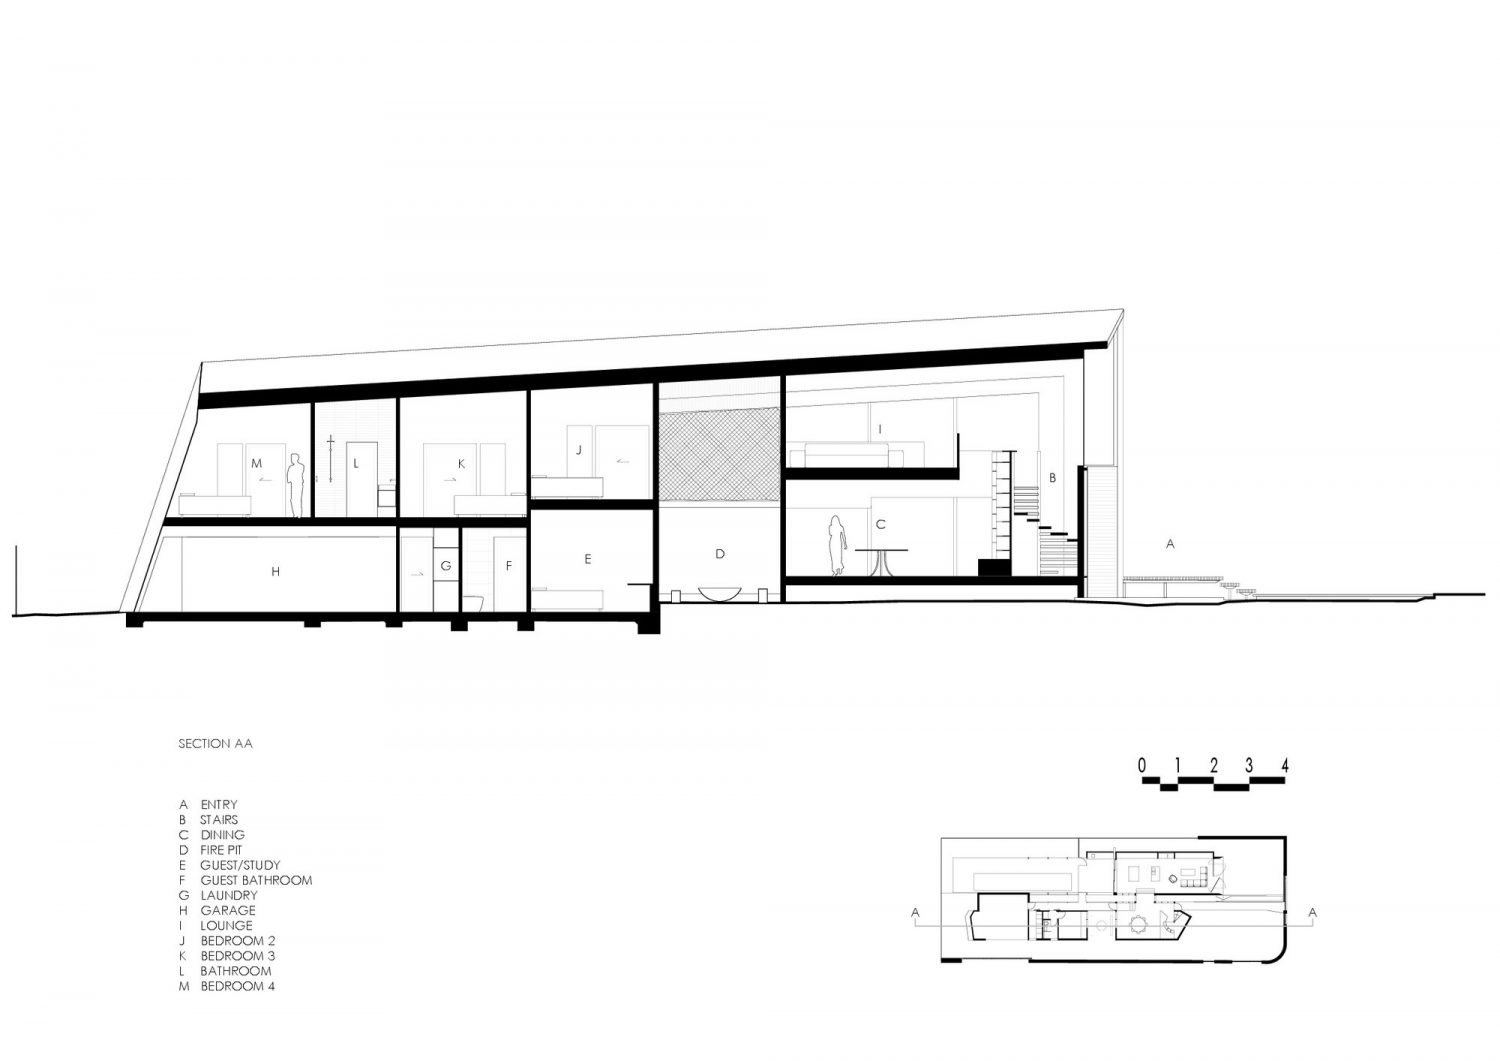 Iron Maiden House by CplusC Architectural Workshop